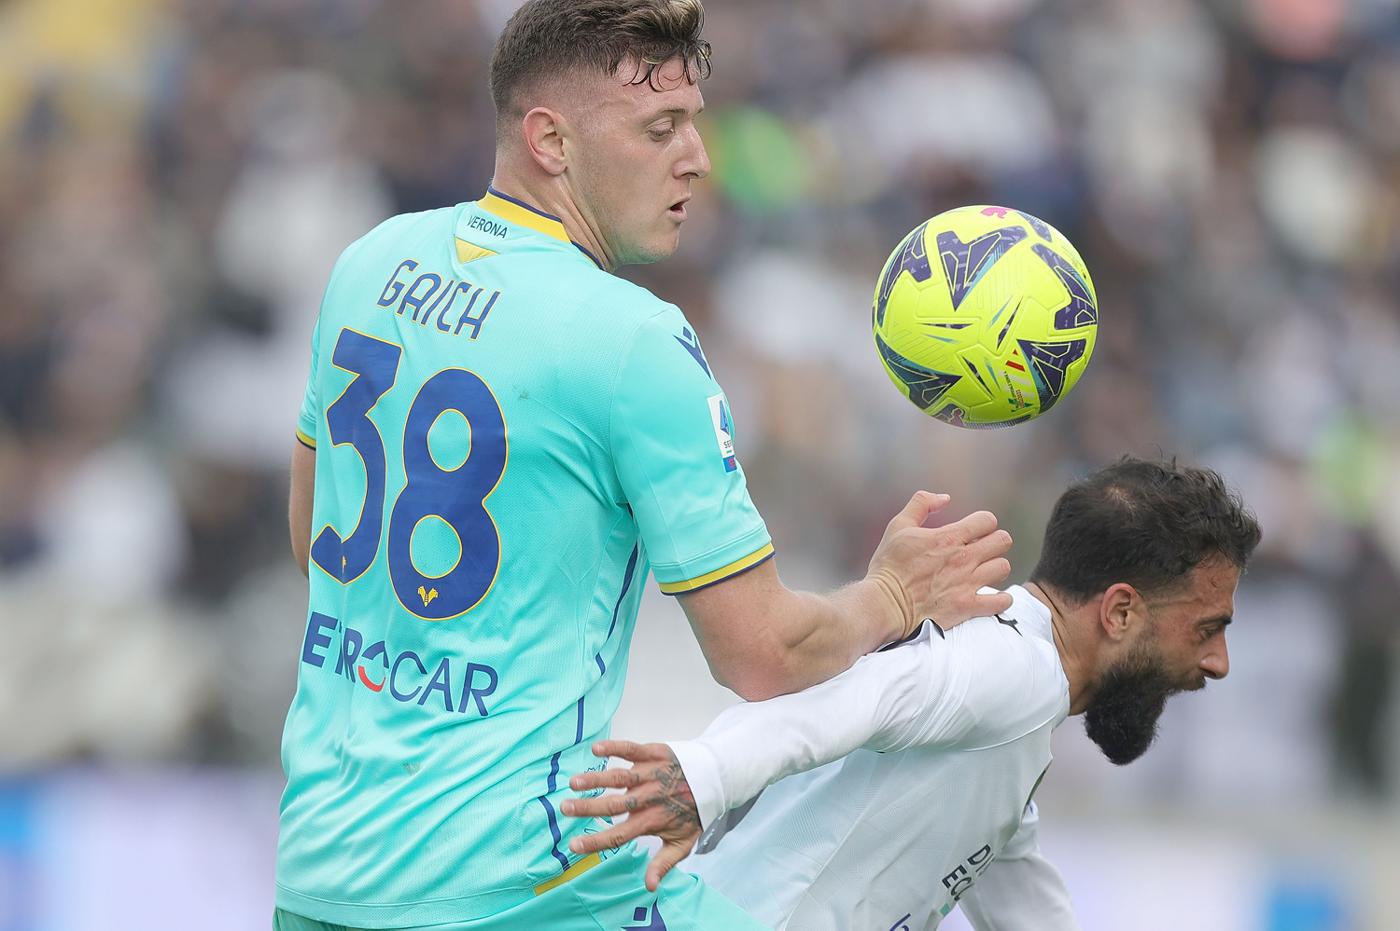 La Spezia gegen Verona - 0-0. Italienische Meisterschaft, 25. Runde. Spielbericht, Statistik